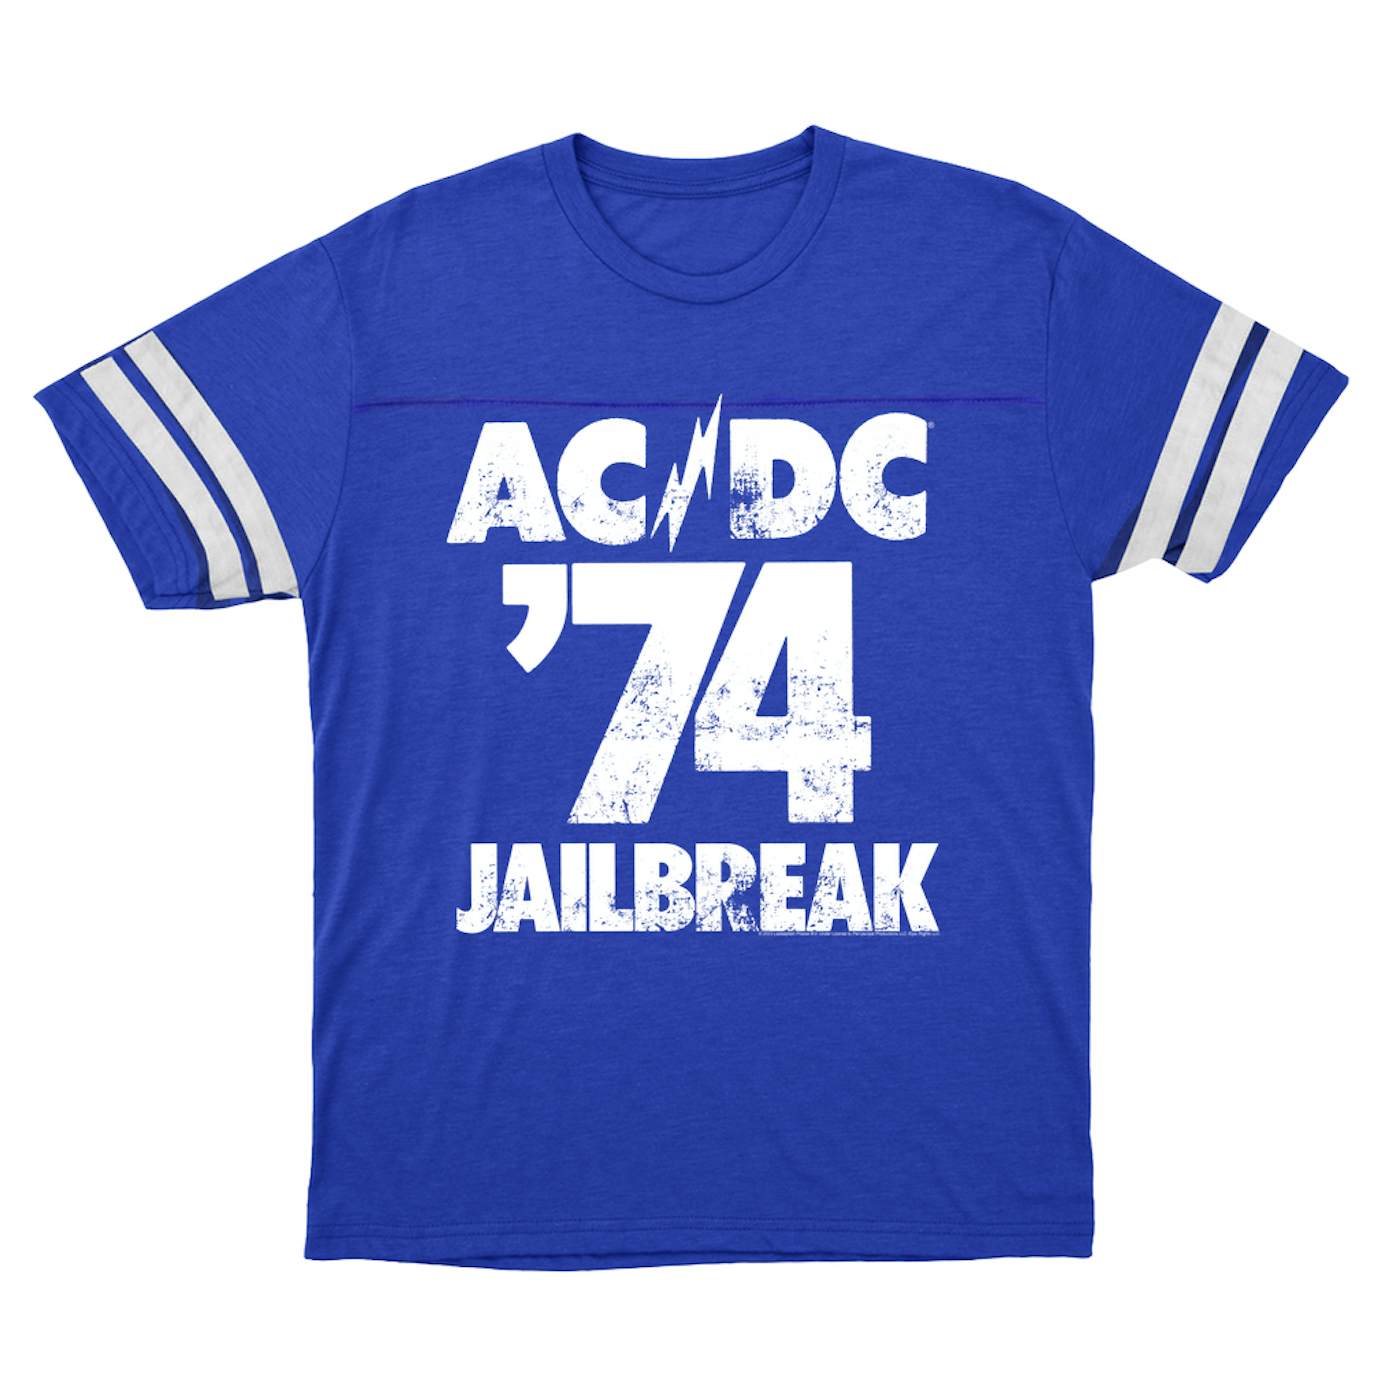 AC/DC - 74 Jailbreak - Vinyl